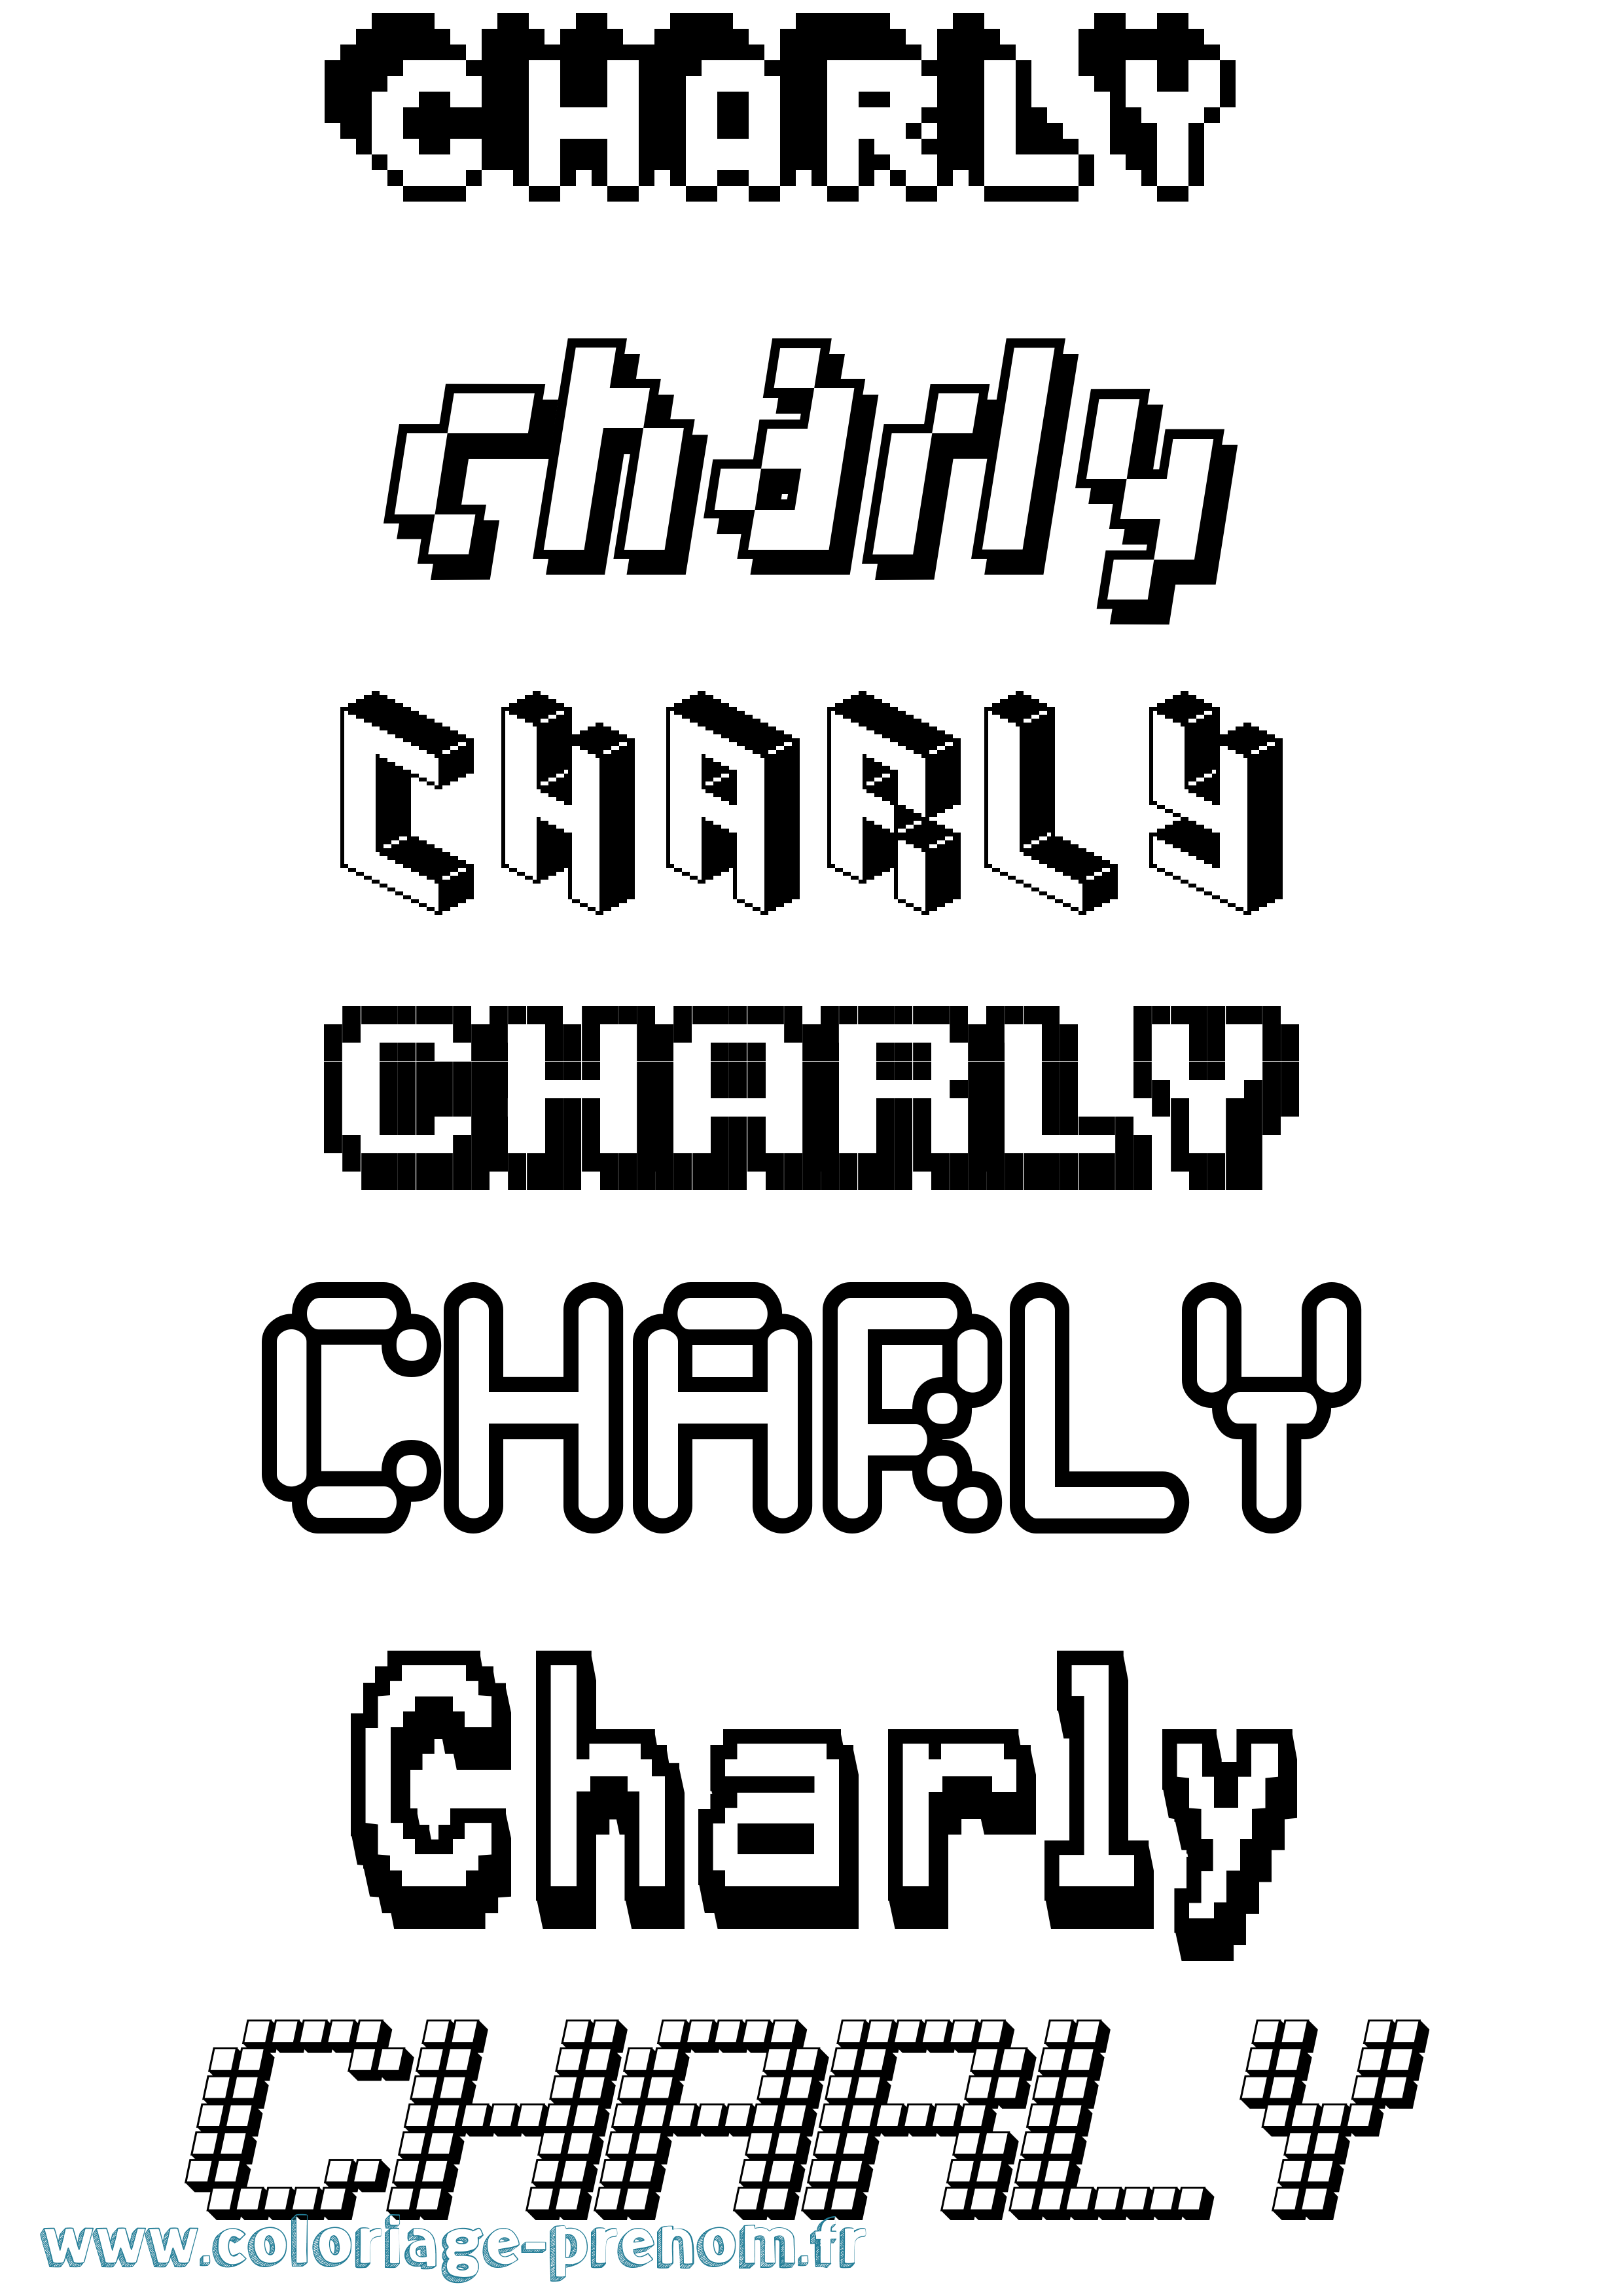 Coloriage prénom Charly